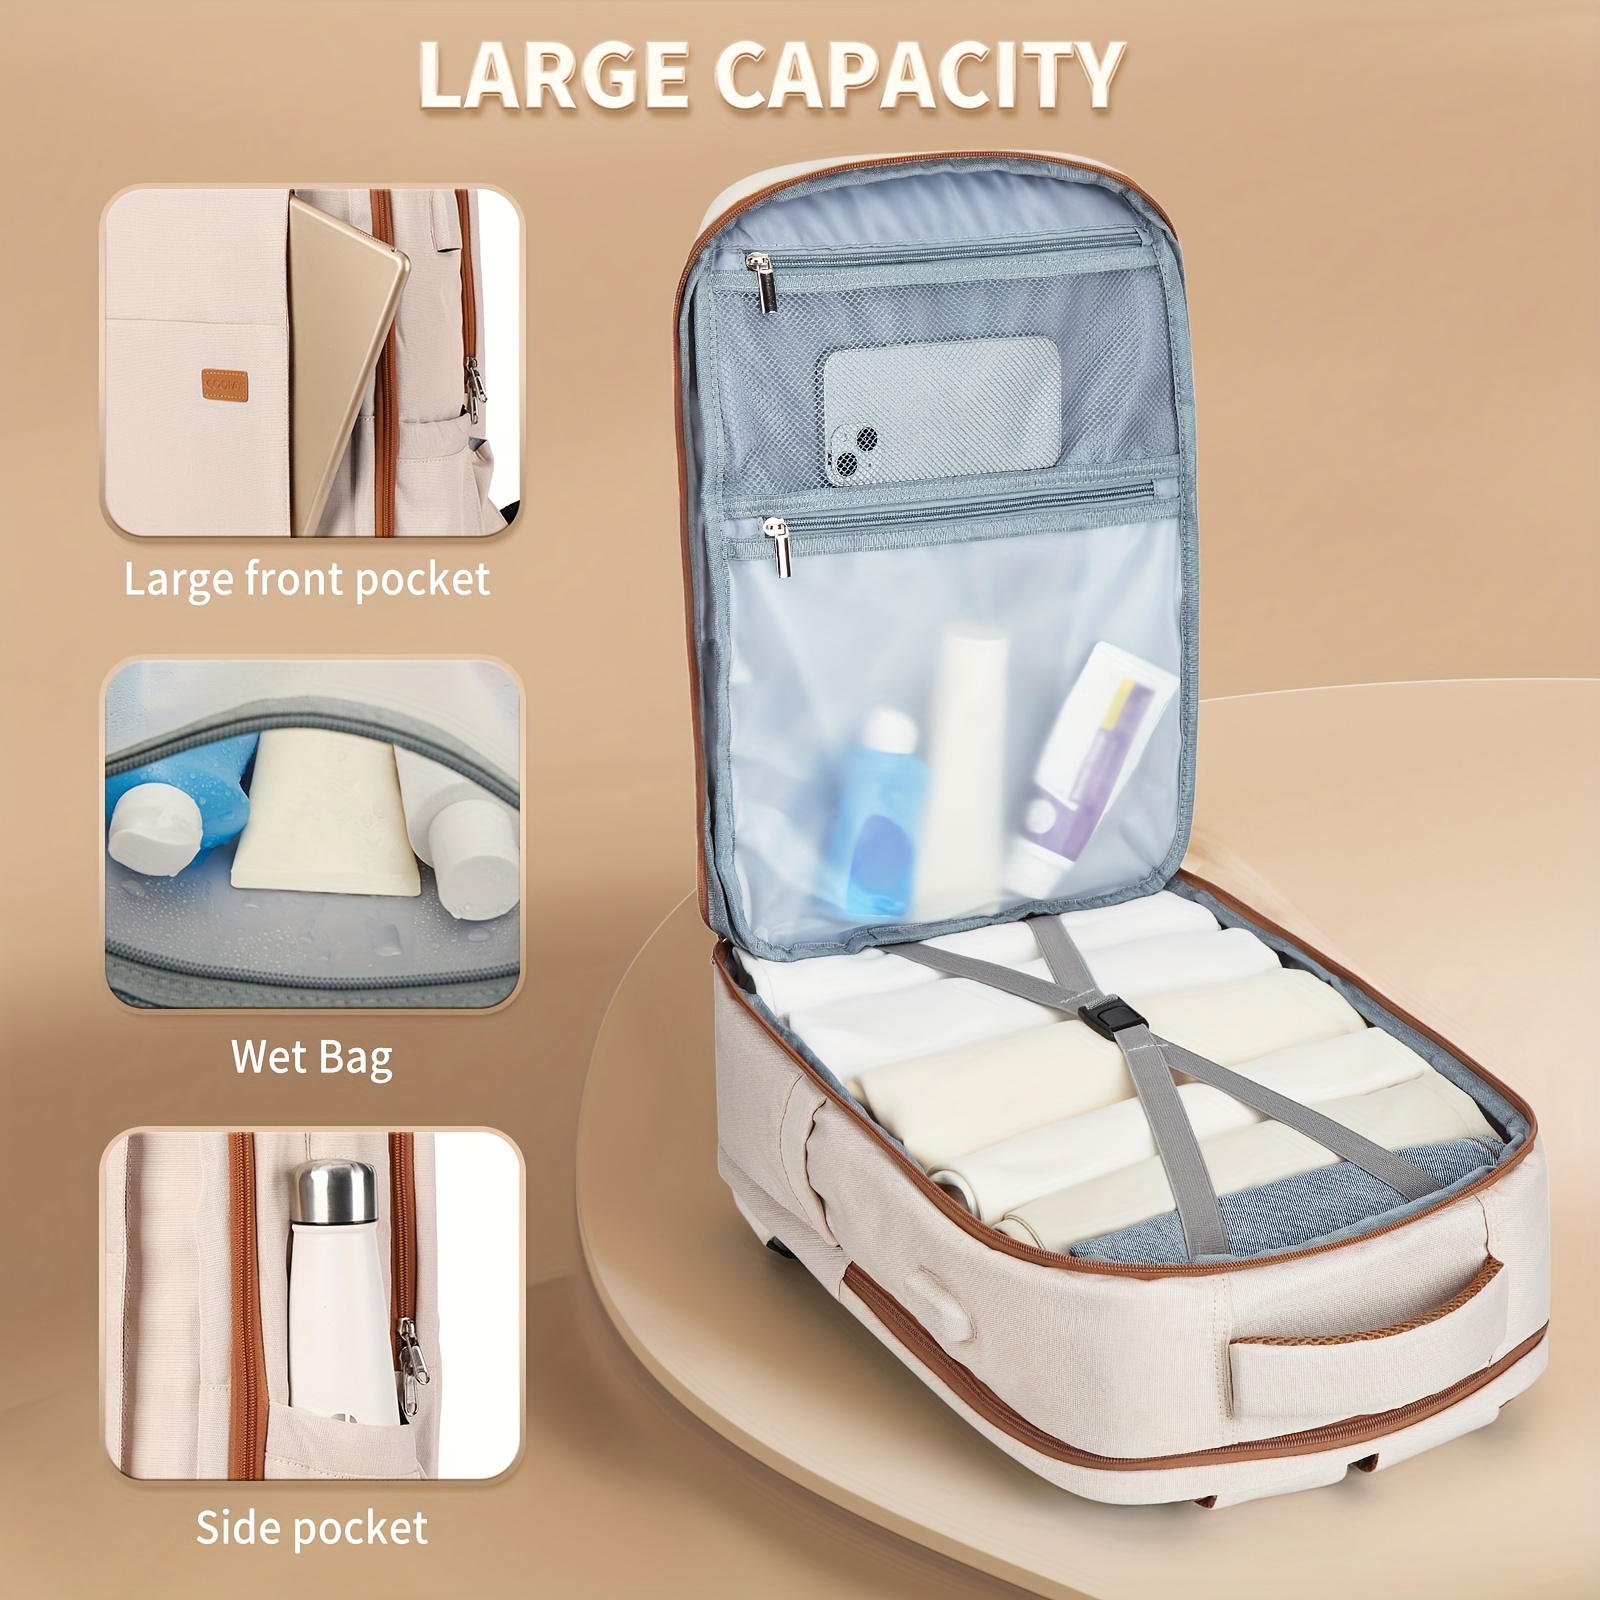 Travel with Purpose with Vessel's Minimalist Premium Bags - Travel